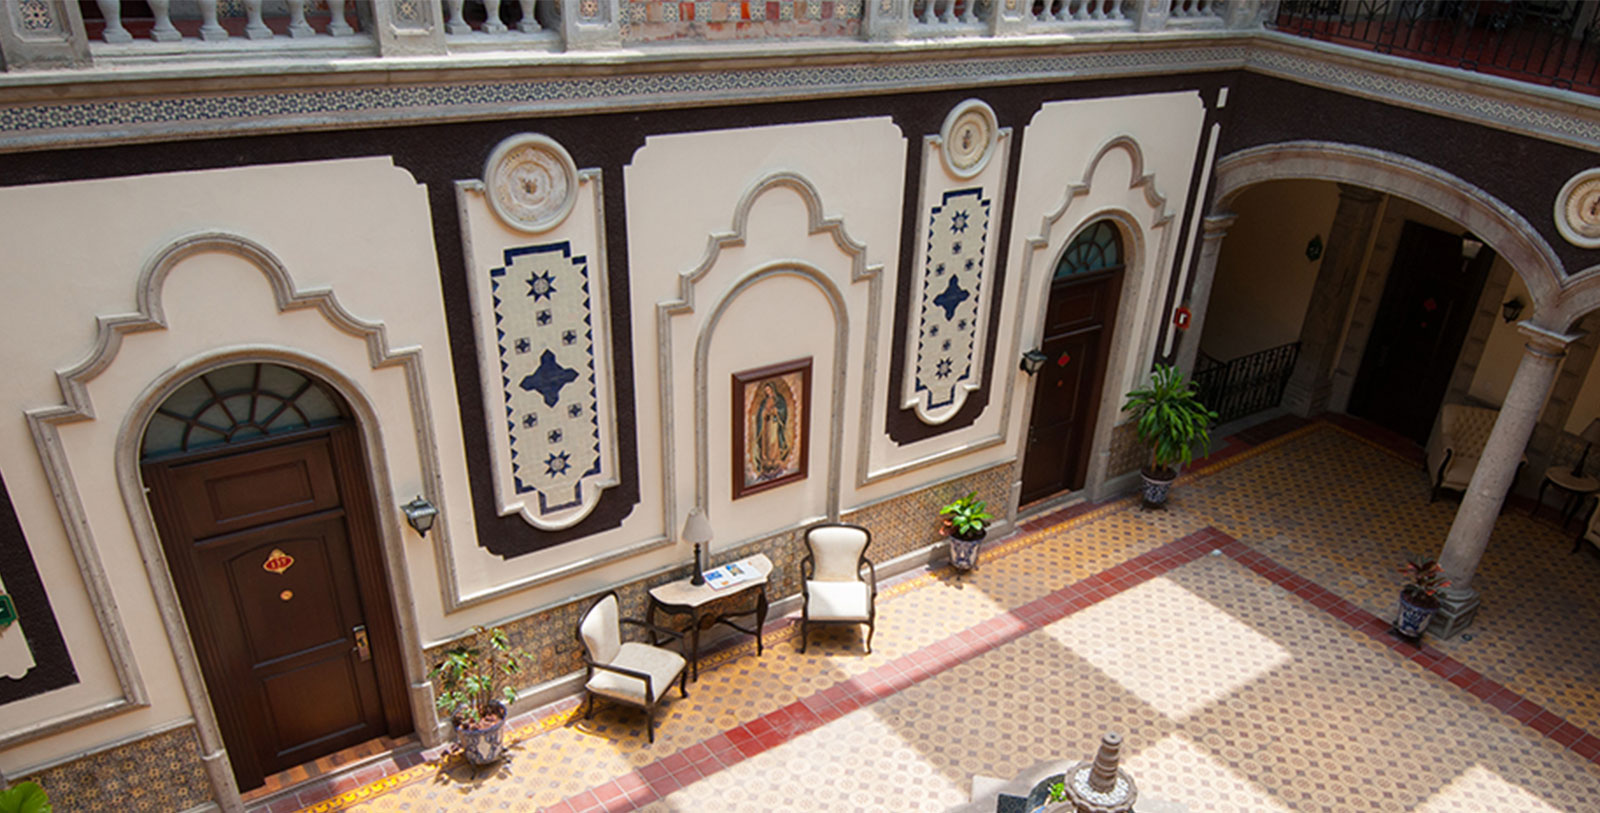 Explore the Plaza de Armas and its many cultural attractions.